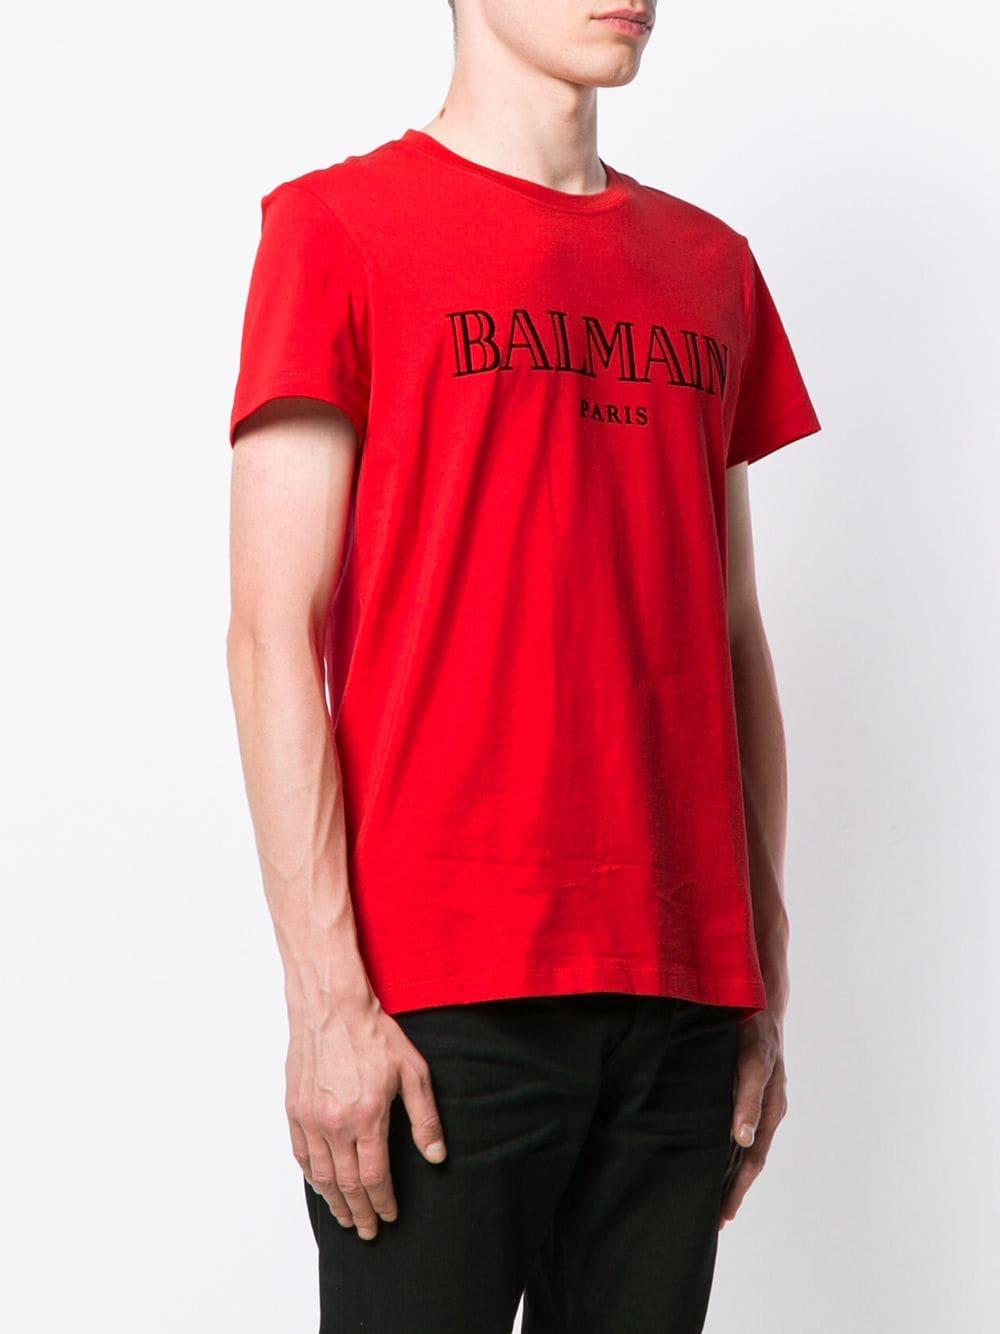 Balmain Cotton Logo T-shirt in Red for Men - Save 50% - Lyst